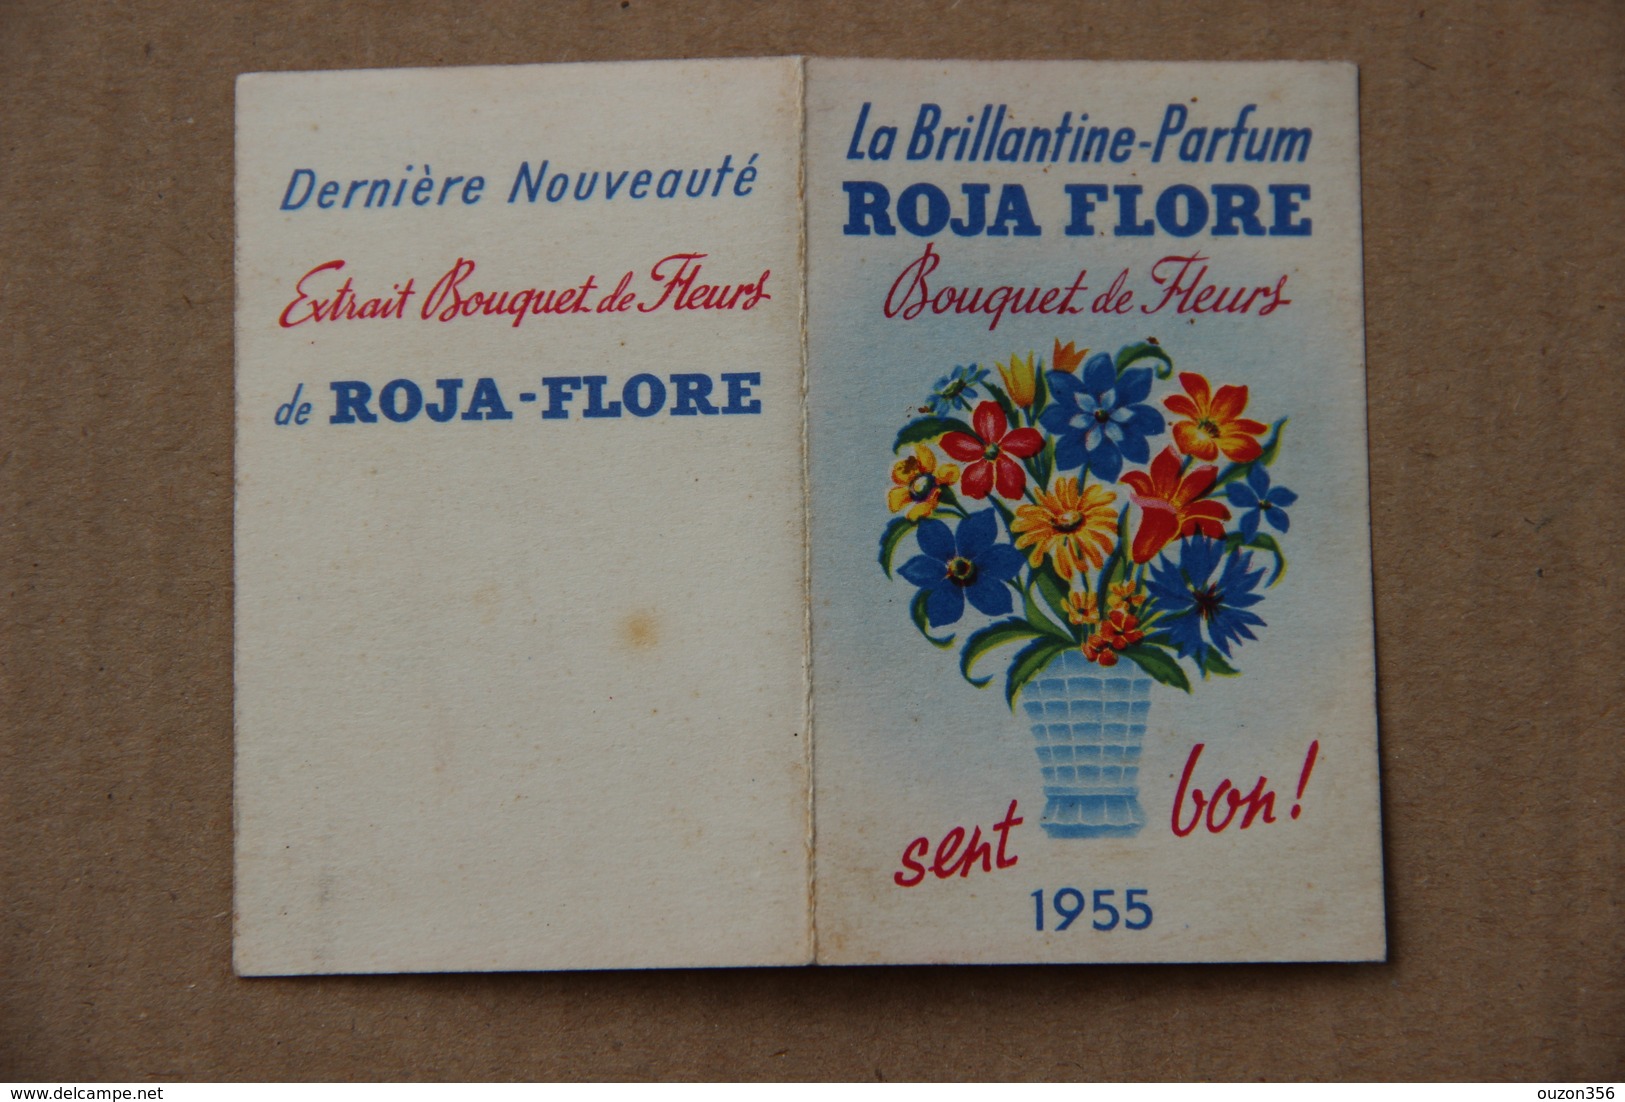 Calendrier Brillantine-Parfum Roja Flore, 1955 - Tamaño Pequeño : 1941-60